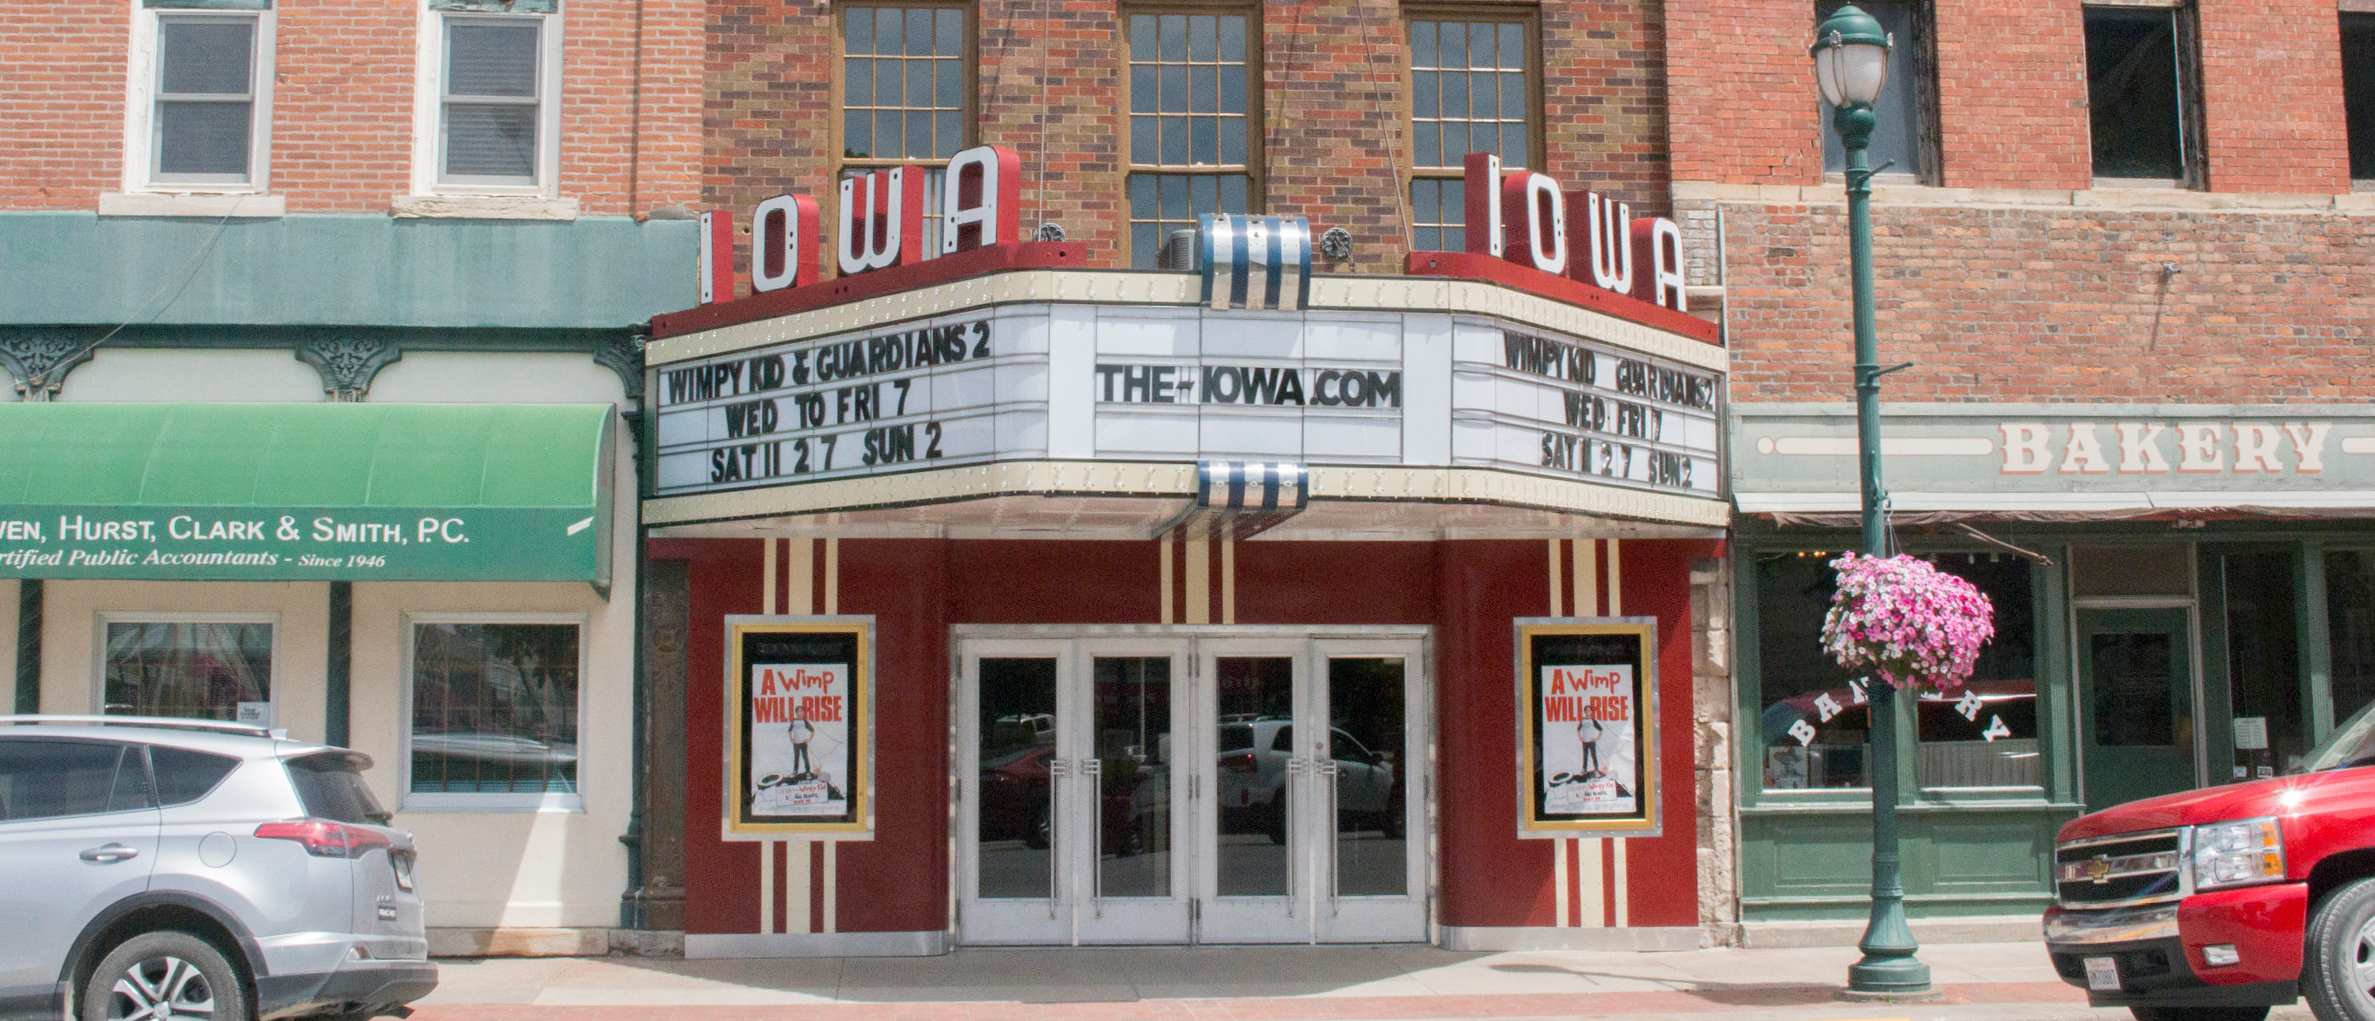 The Iowa Theater